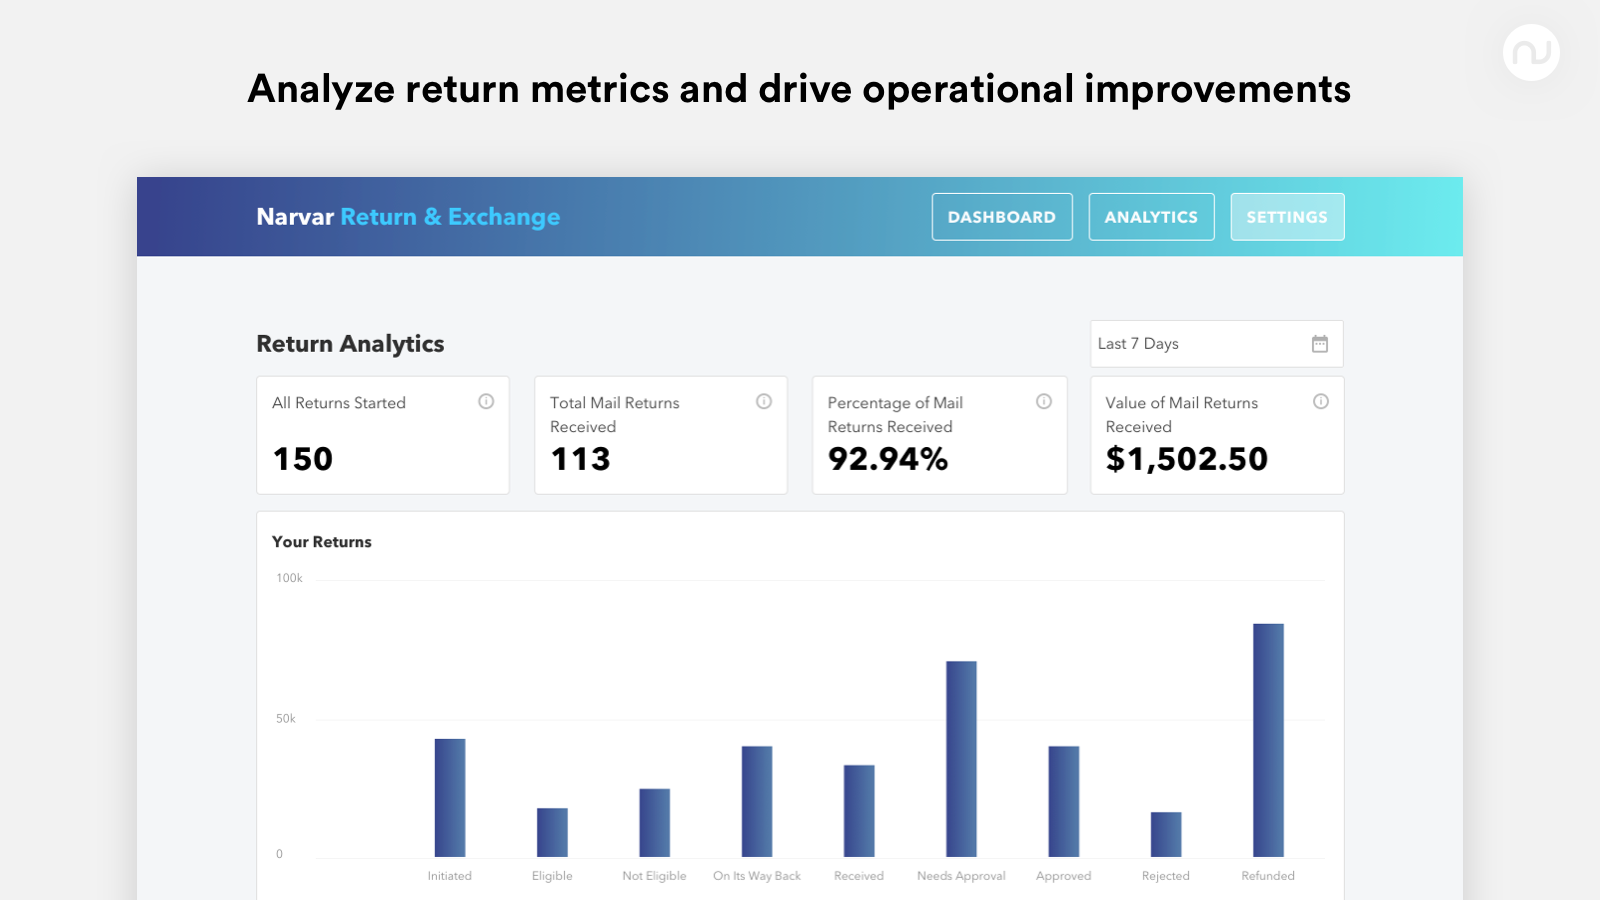 Analyze return metrics and drive operational improvements